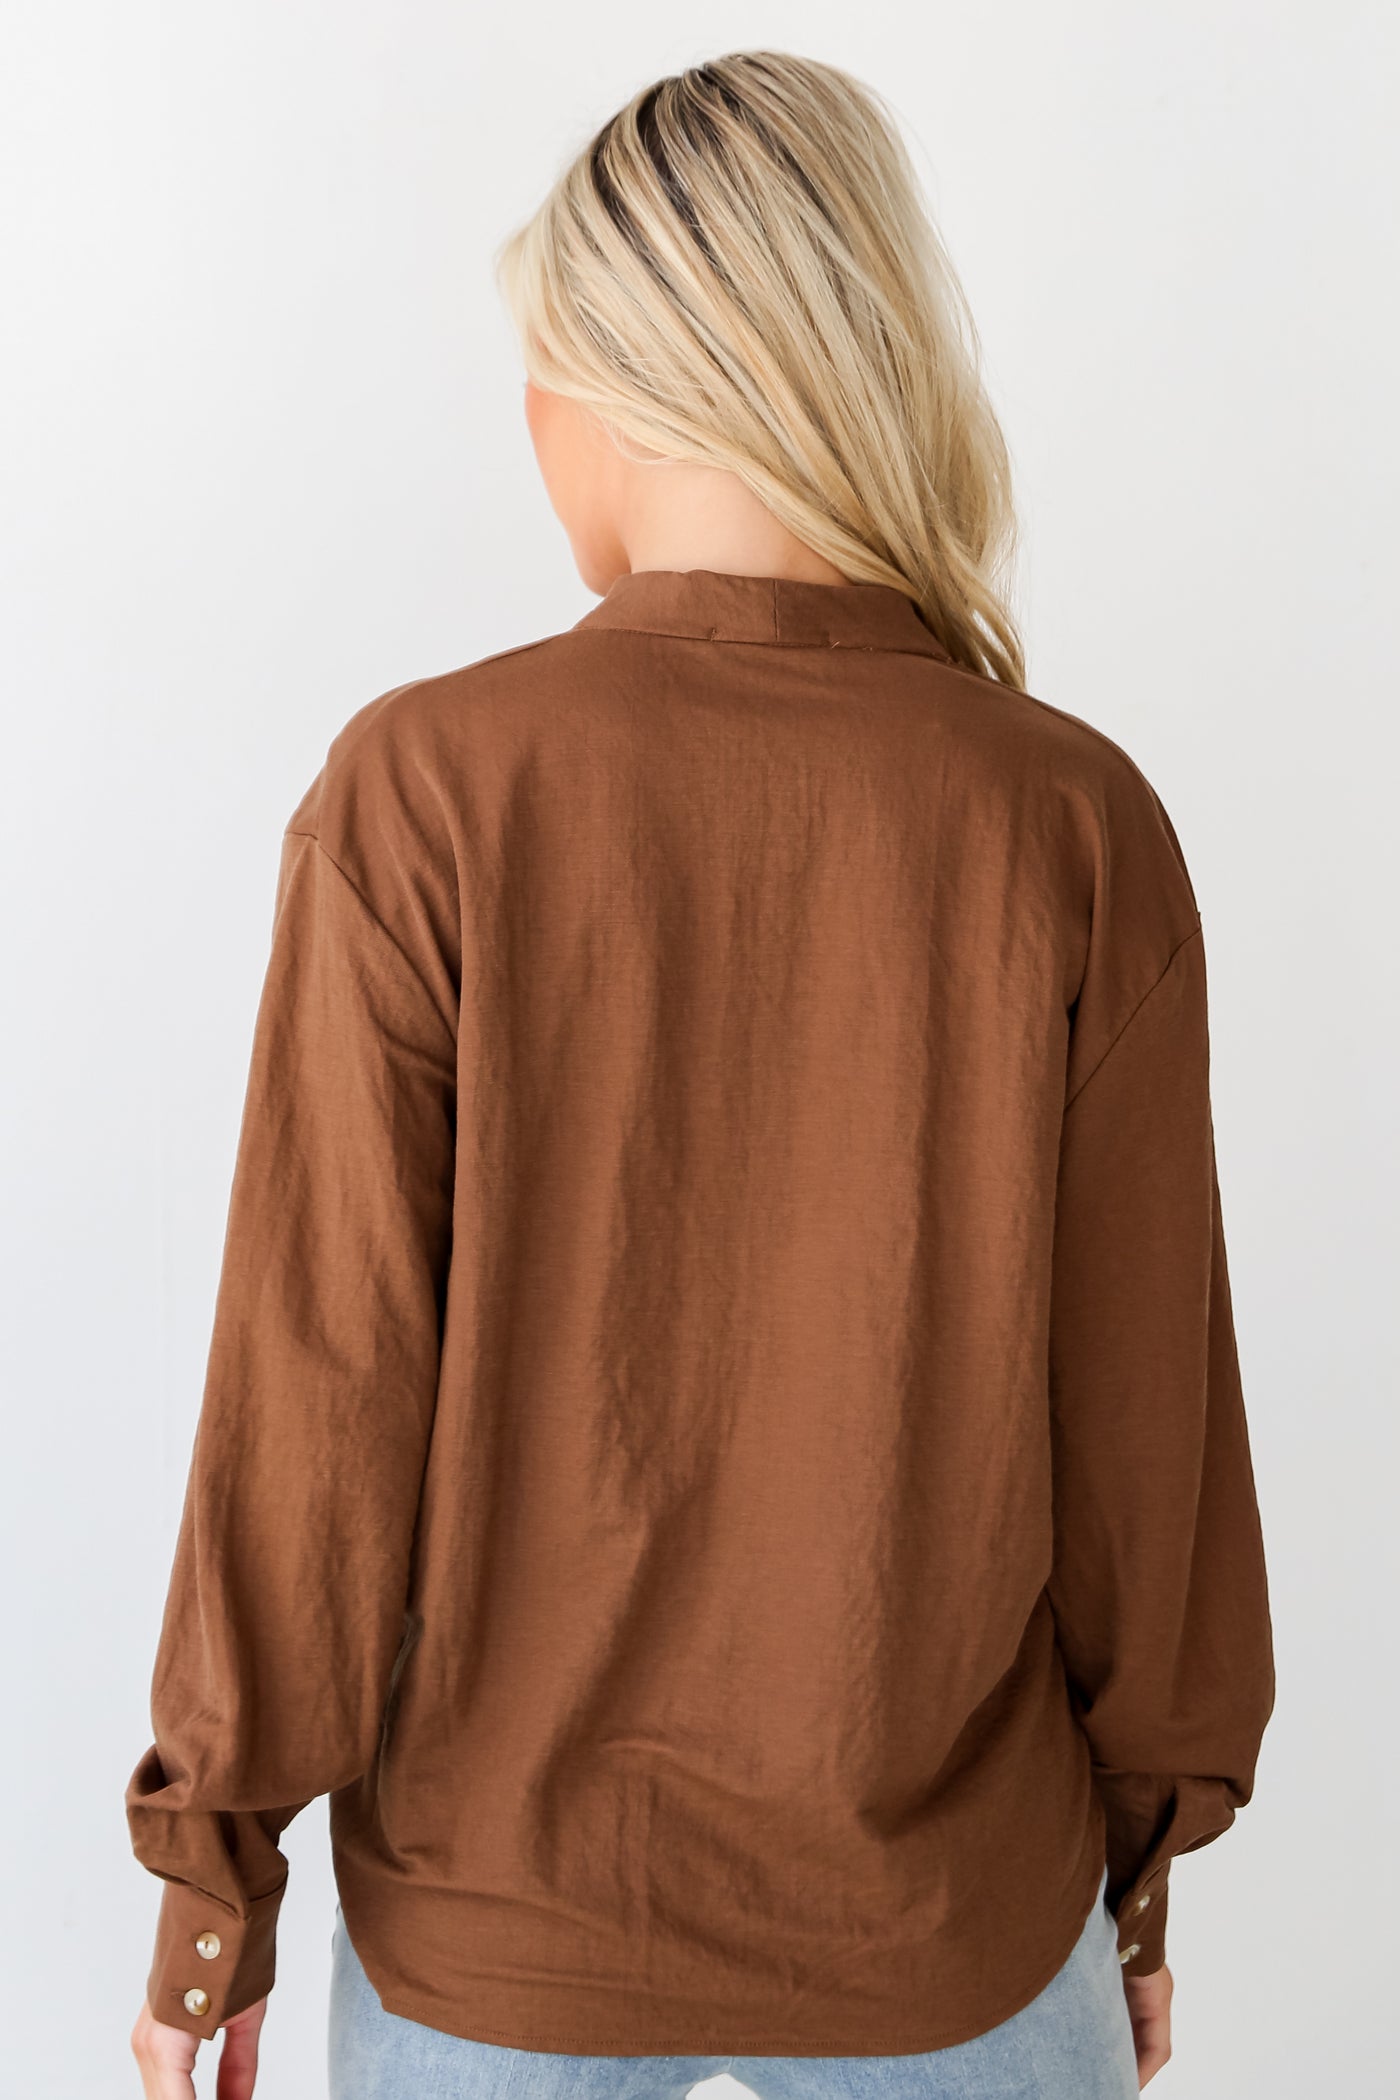 brown blouse